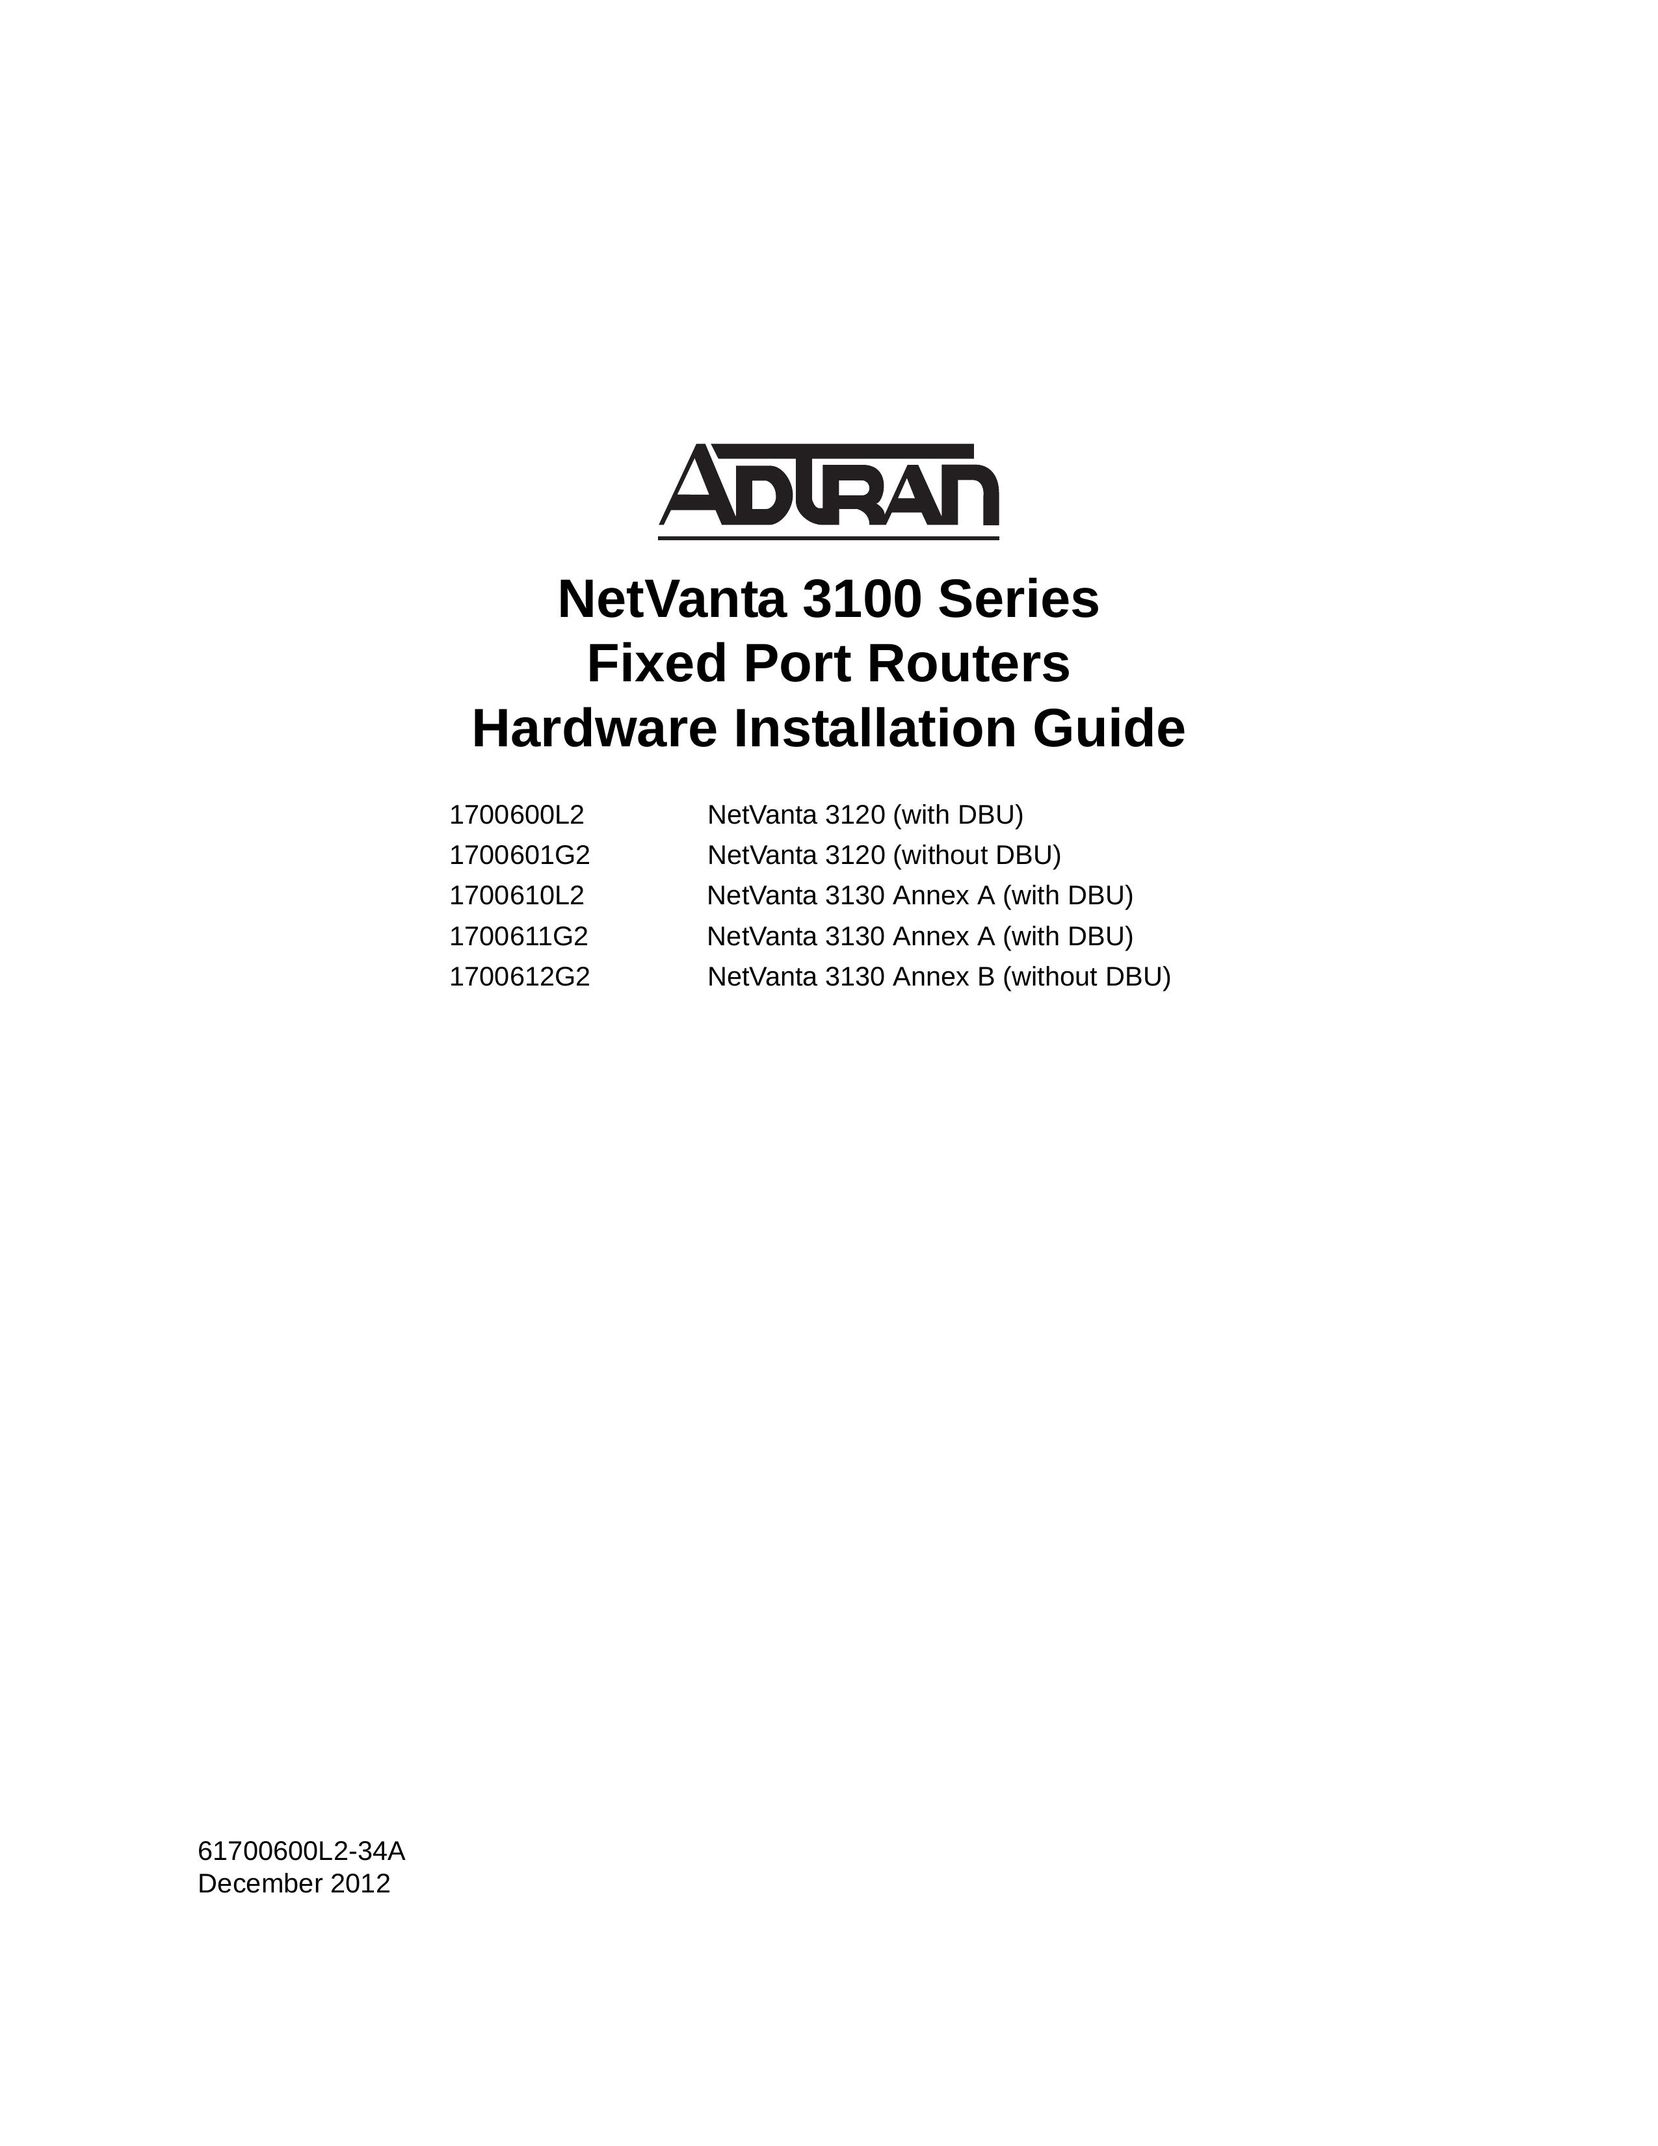 ADTRAN 1700601G2 Network Router User Manual